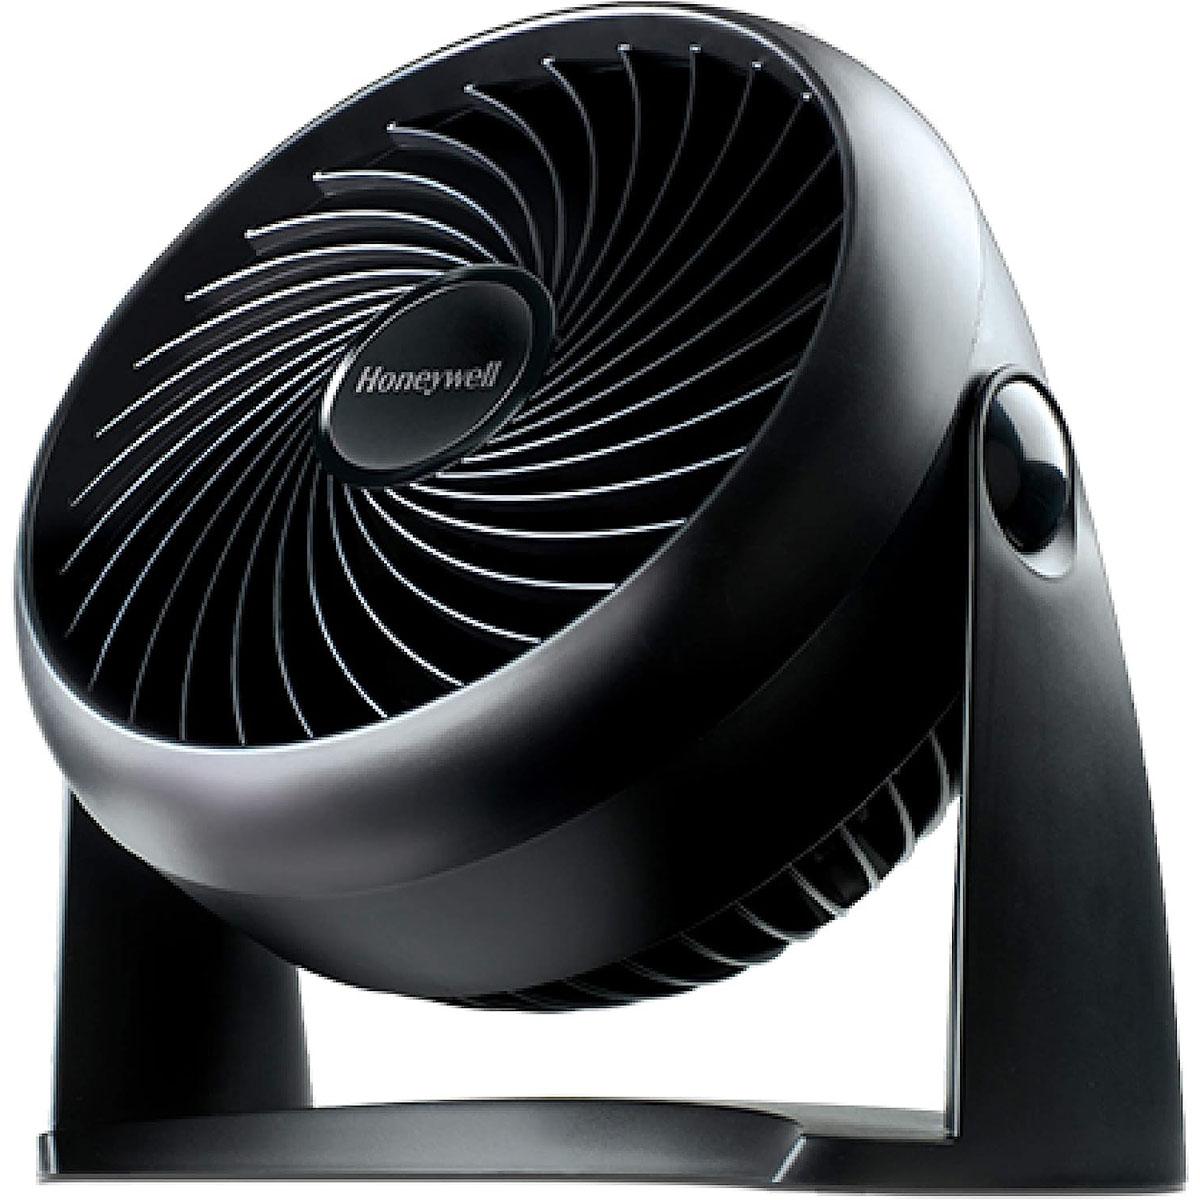 Honeywell HT-900 TurboForce Air Circulator Fan for $13.59